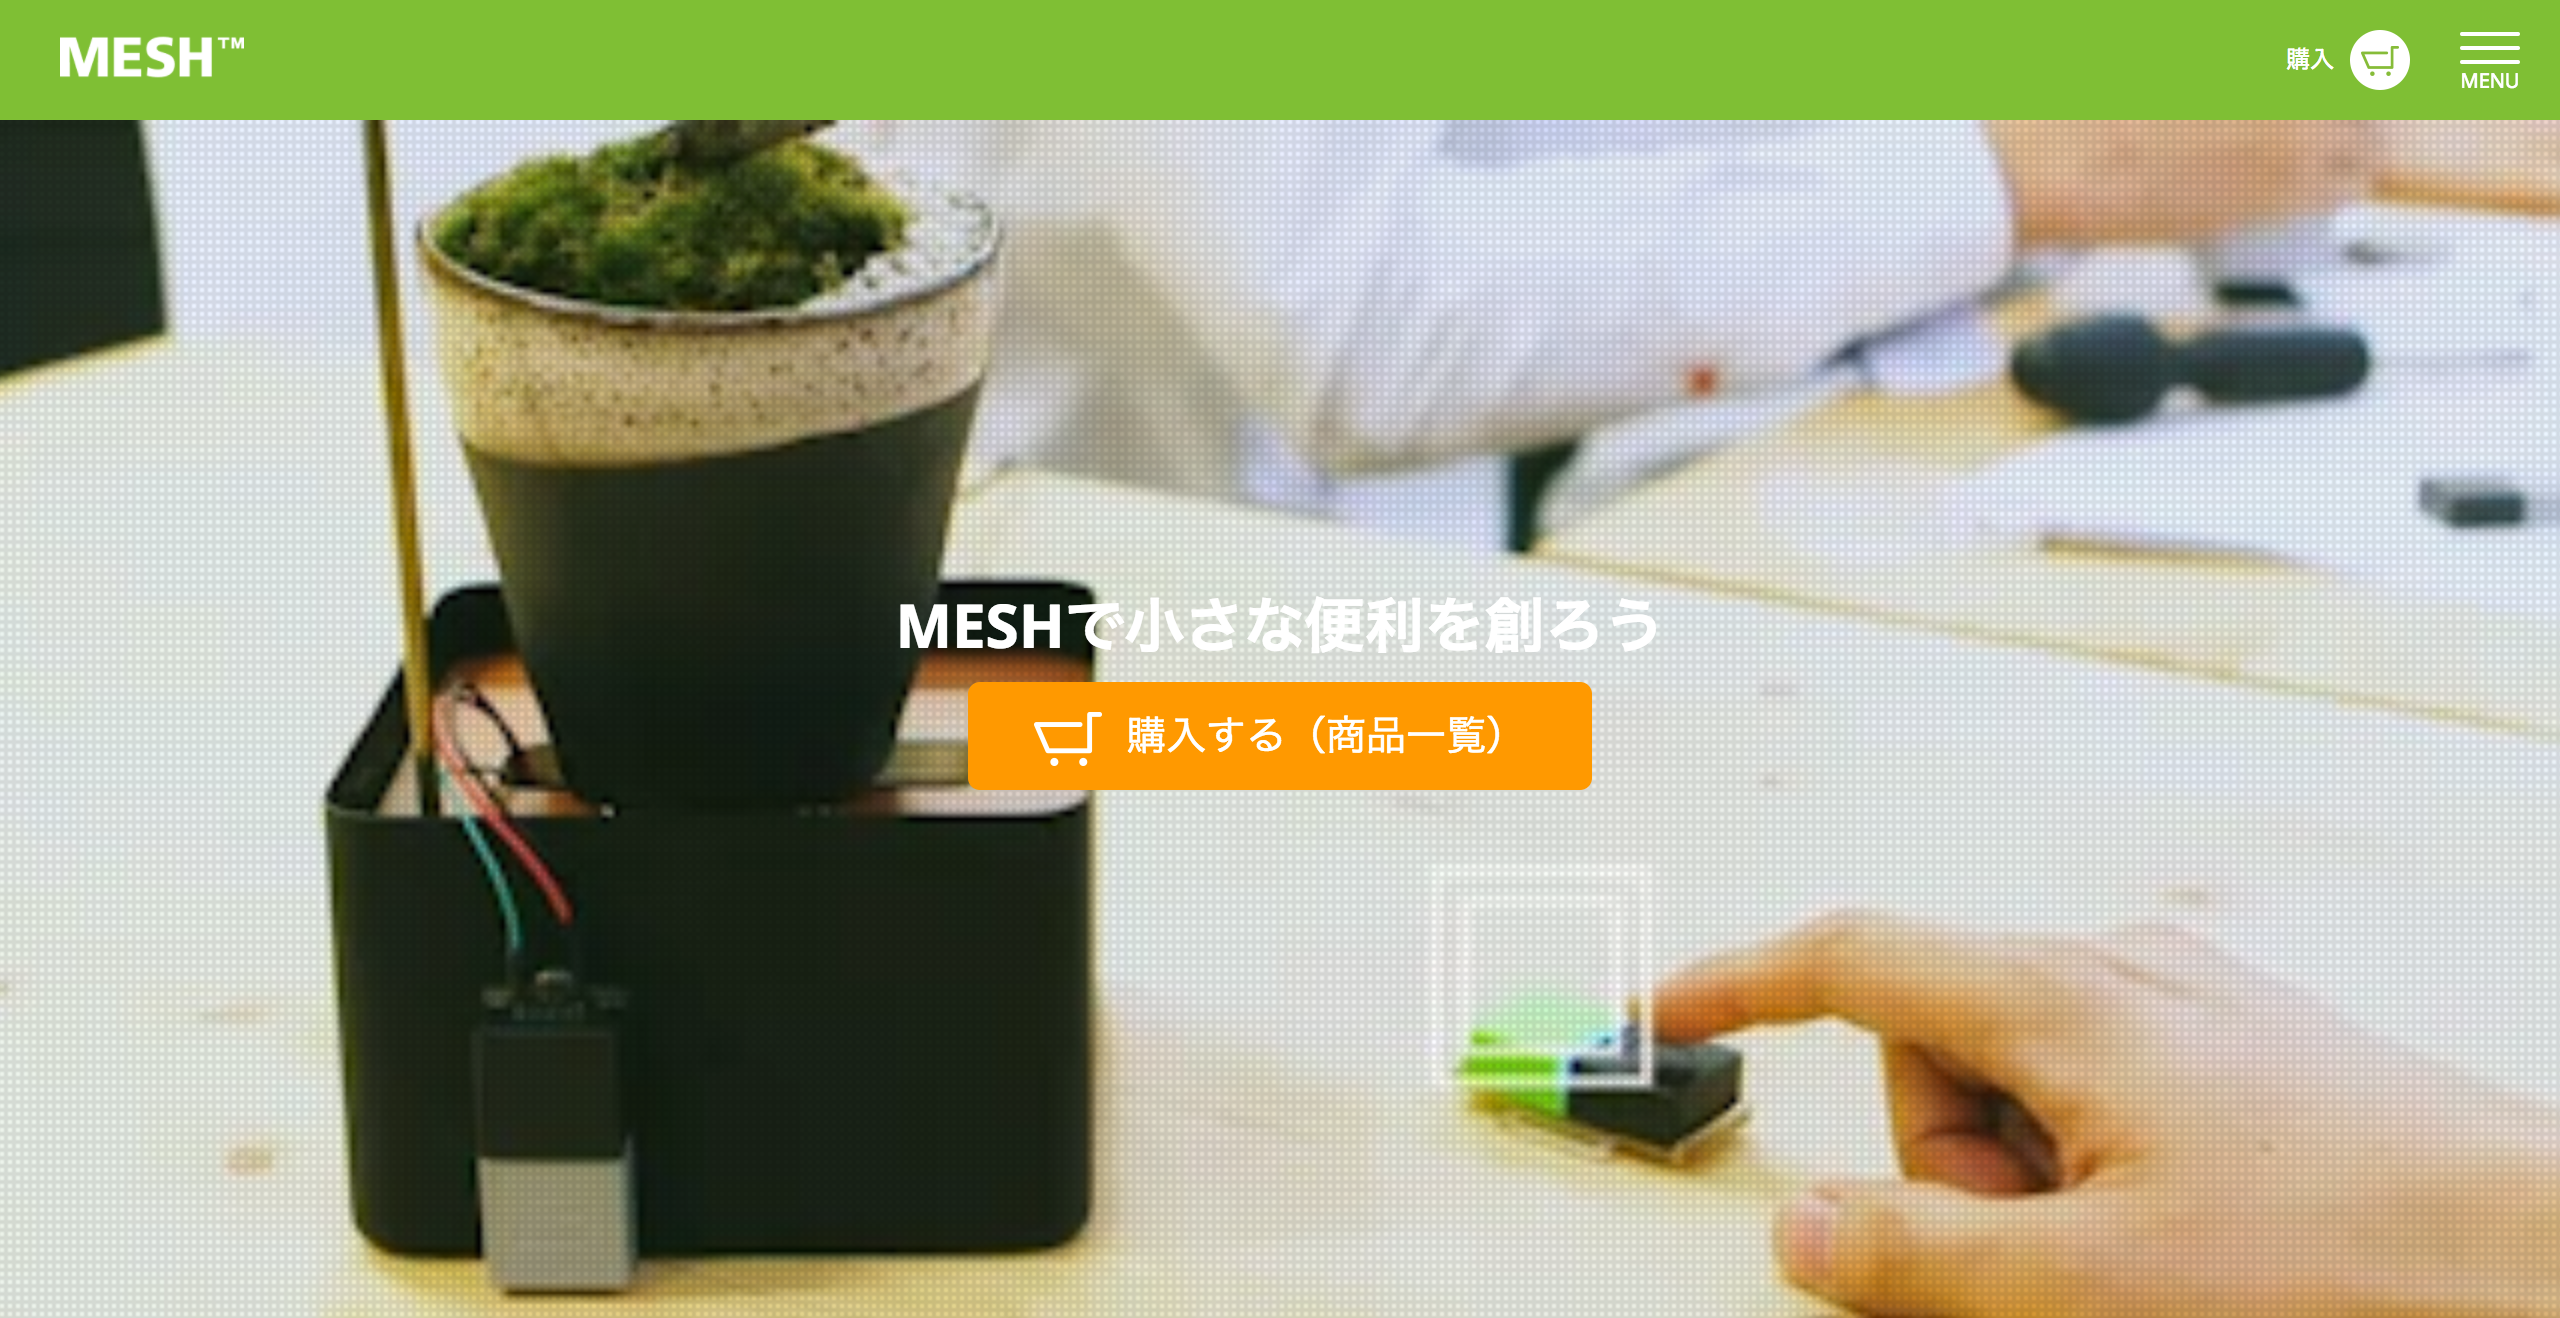 FireShot Capture 269 - MESH：遊び心を形にできる、アプリとつなげるブロック形状の電子タグ｜ソニー - http___meshprj.com_jp_